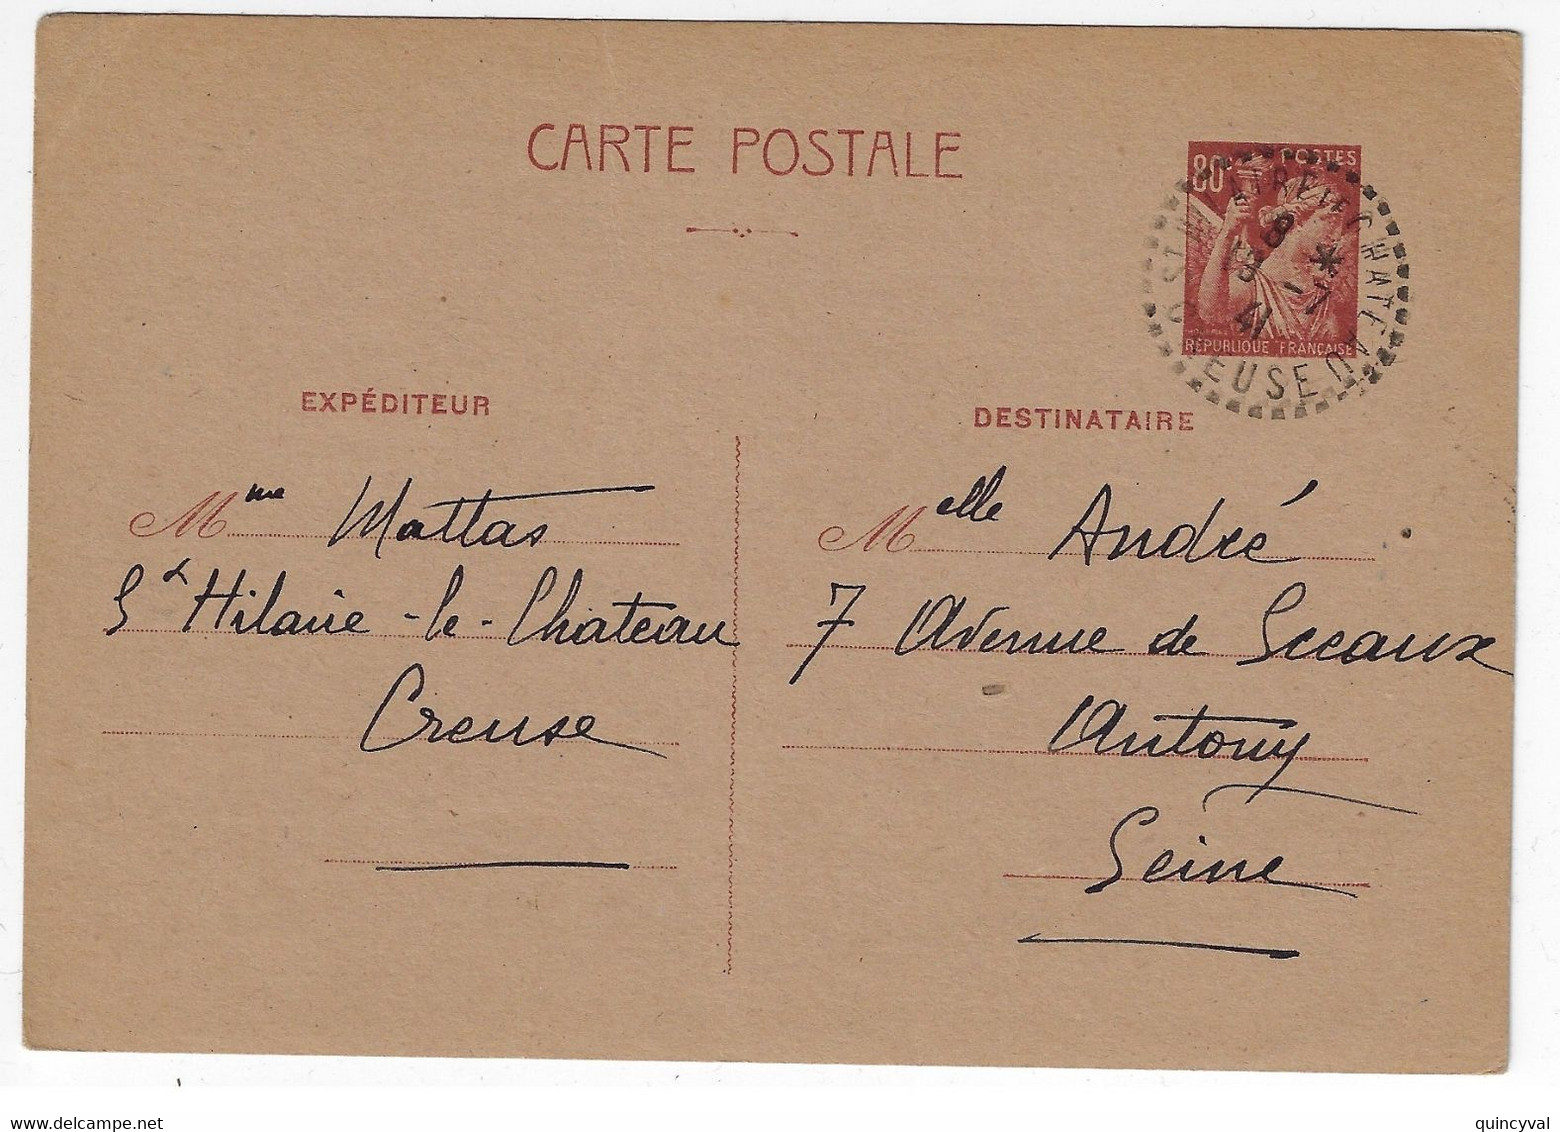 St HILAIRE Le CHÂTEAU Creuse Carte Postale Entier 80c Iris Yv 431-CP2 Ob 19 7 1941 - Standard Postcards & Stamped On Demand (before 1995)